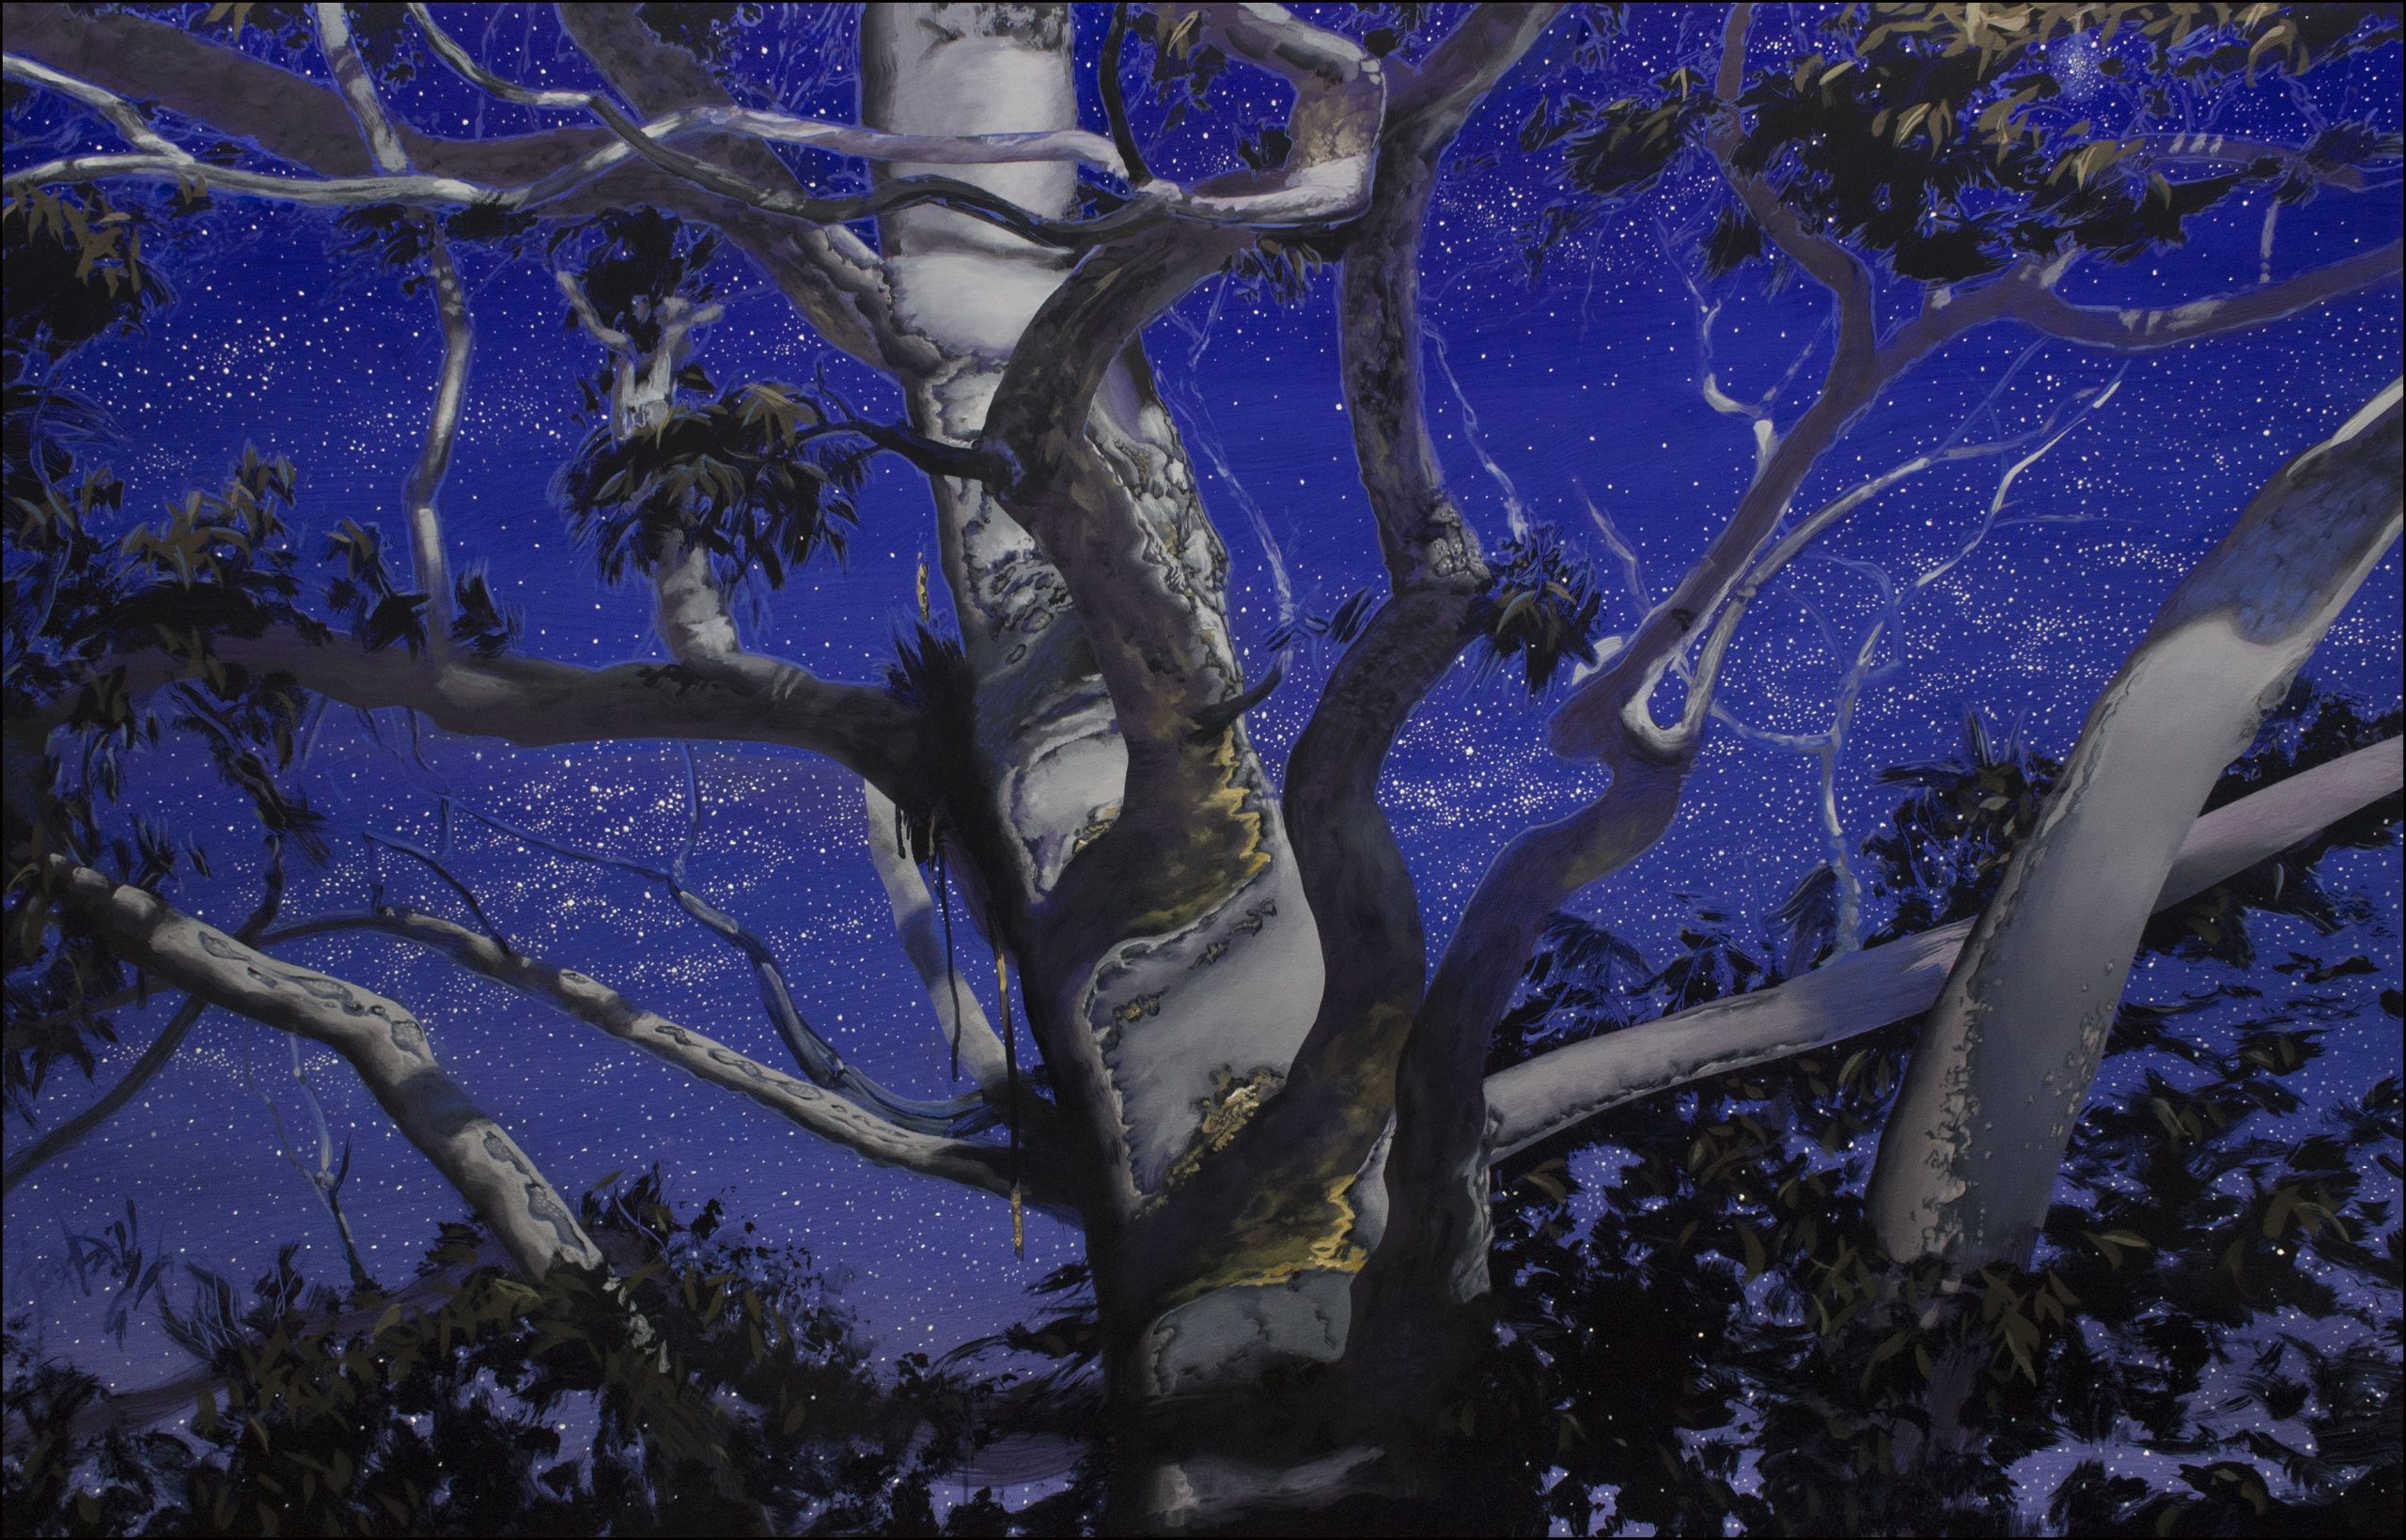 Neil Taylor 'Moonlight In Glory' acrylic on canvas 117 x 183cm $18,900